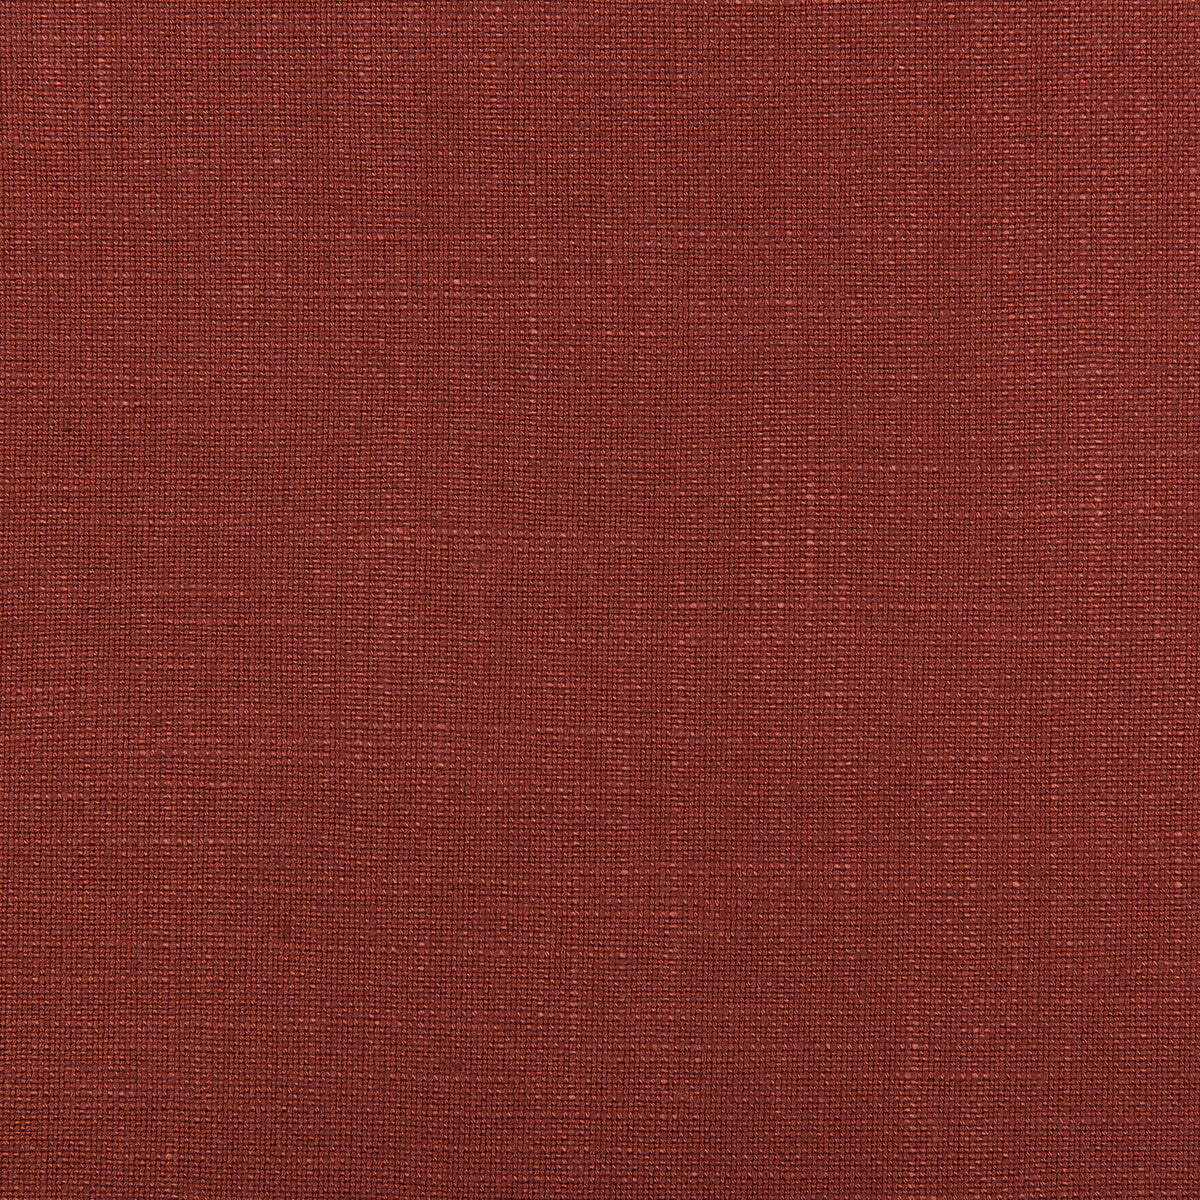 Aura fabric in paprika color - pattern 35520.9.0 - by Kravet Design